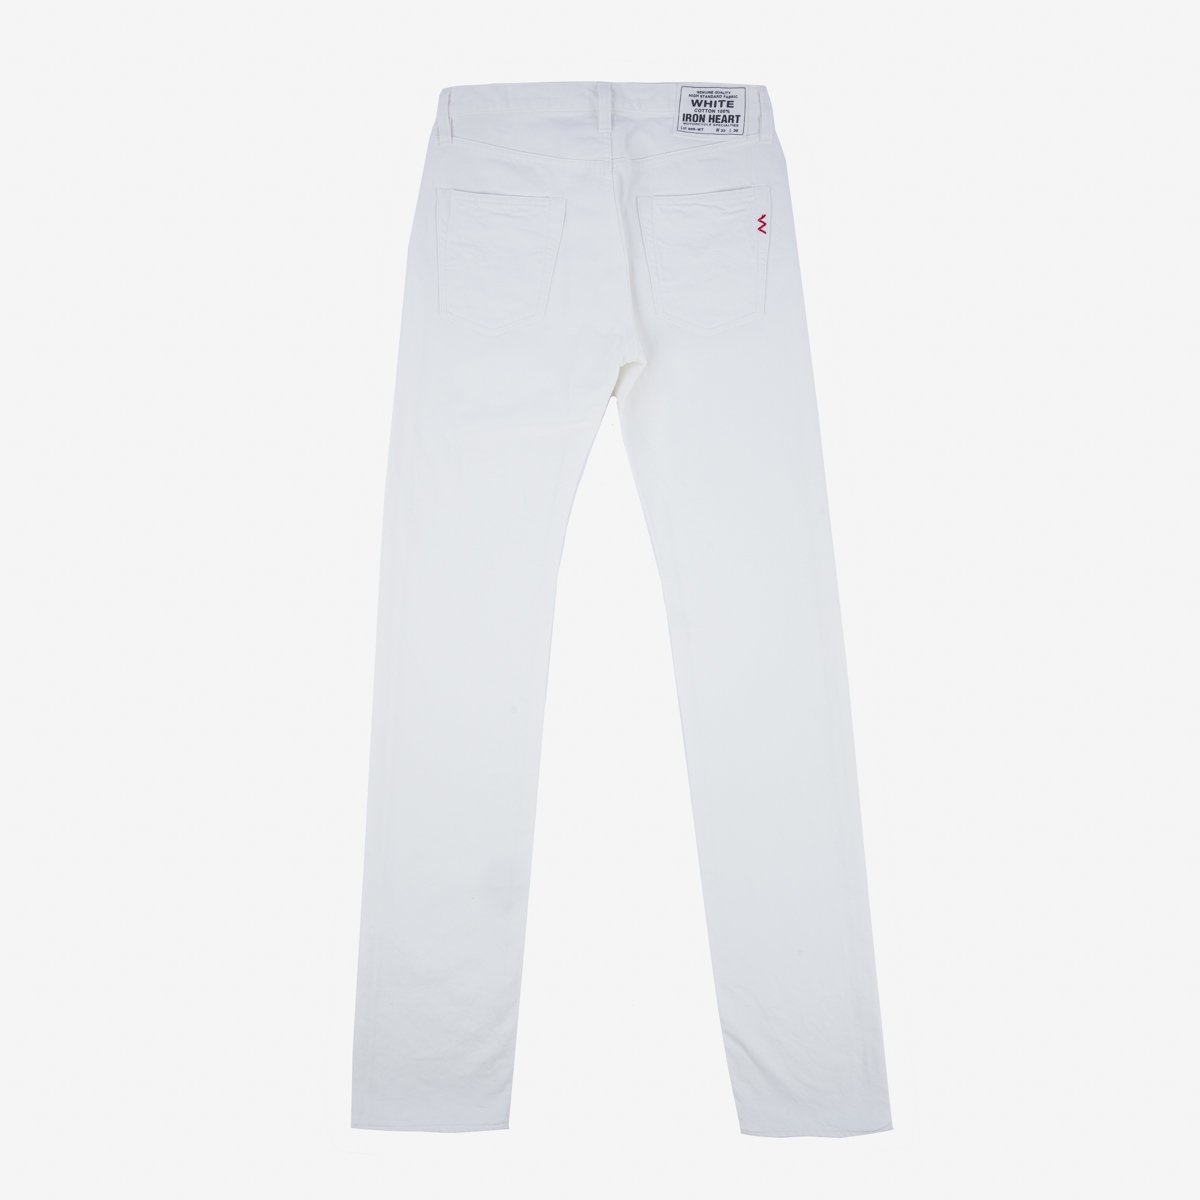 IH-666-WT 13.5oz Denim Slim Straight Cut Jeans - White - 4